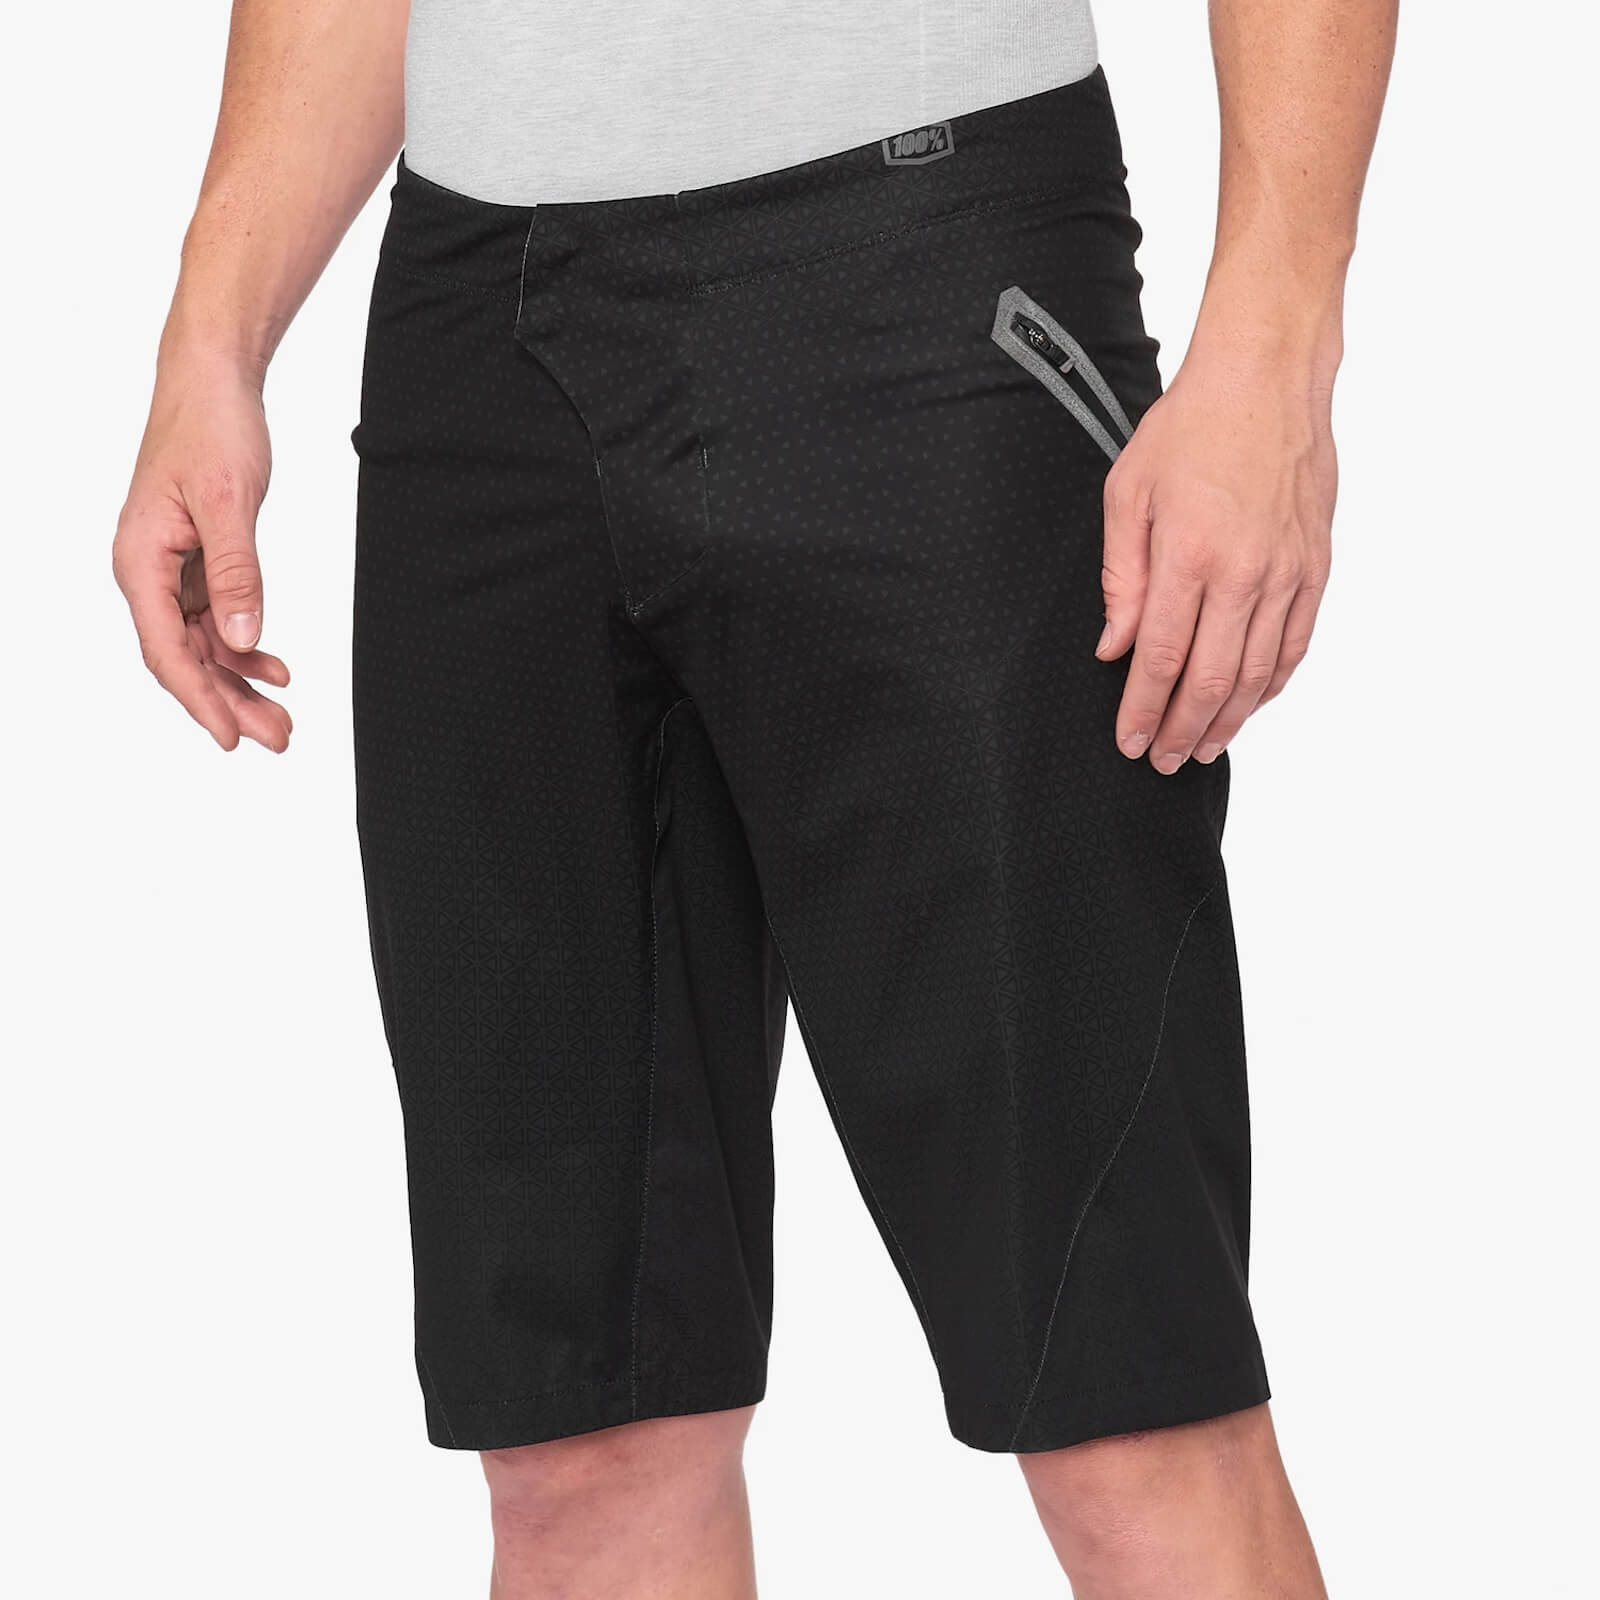 100% Hydromatic MTB Shorts - 32